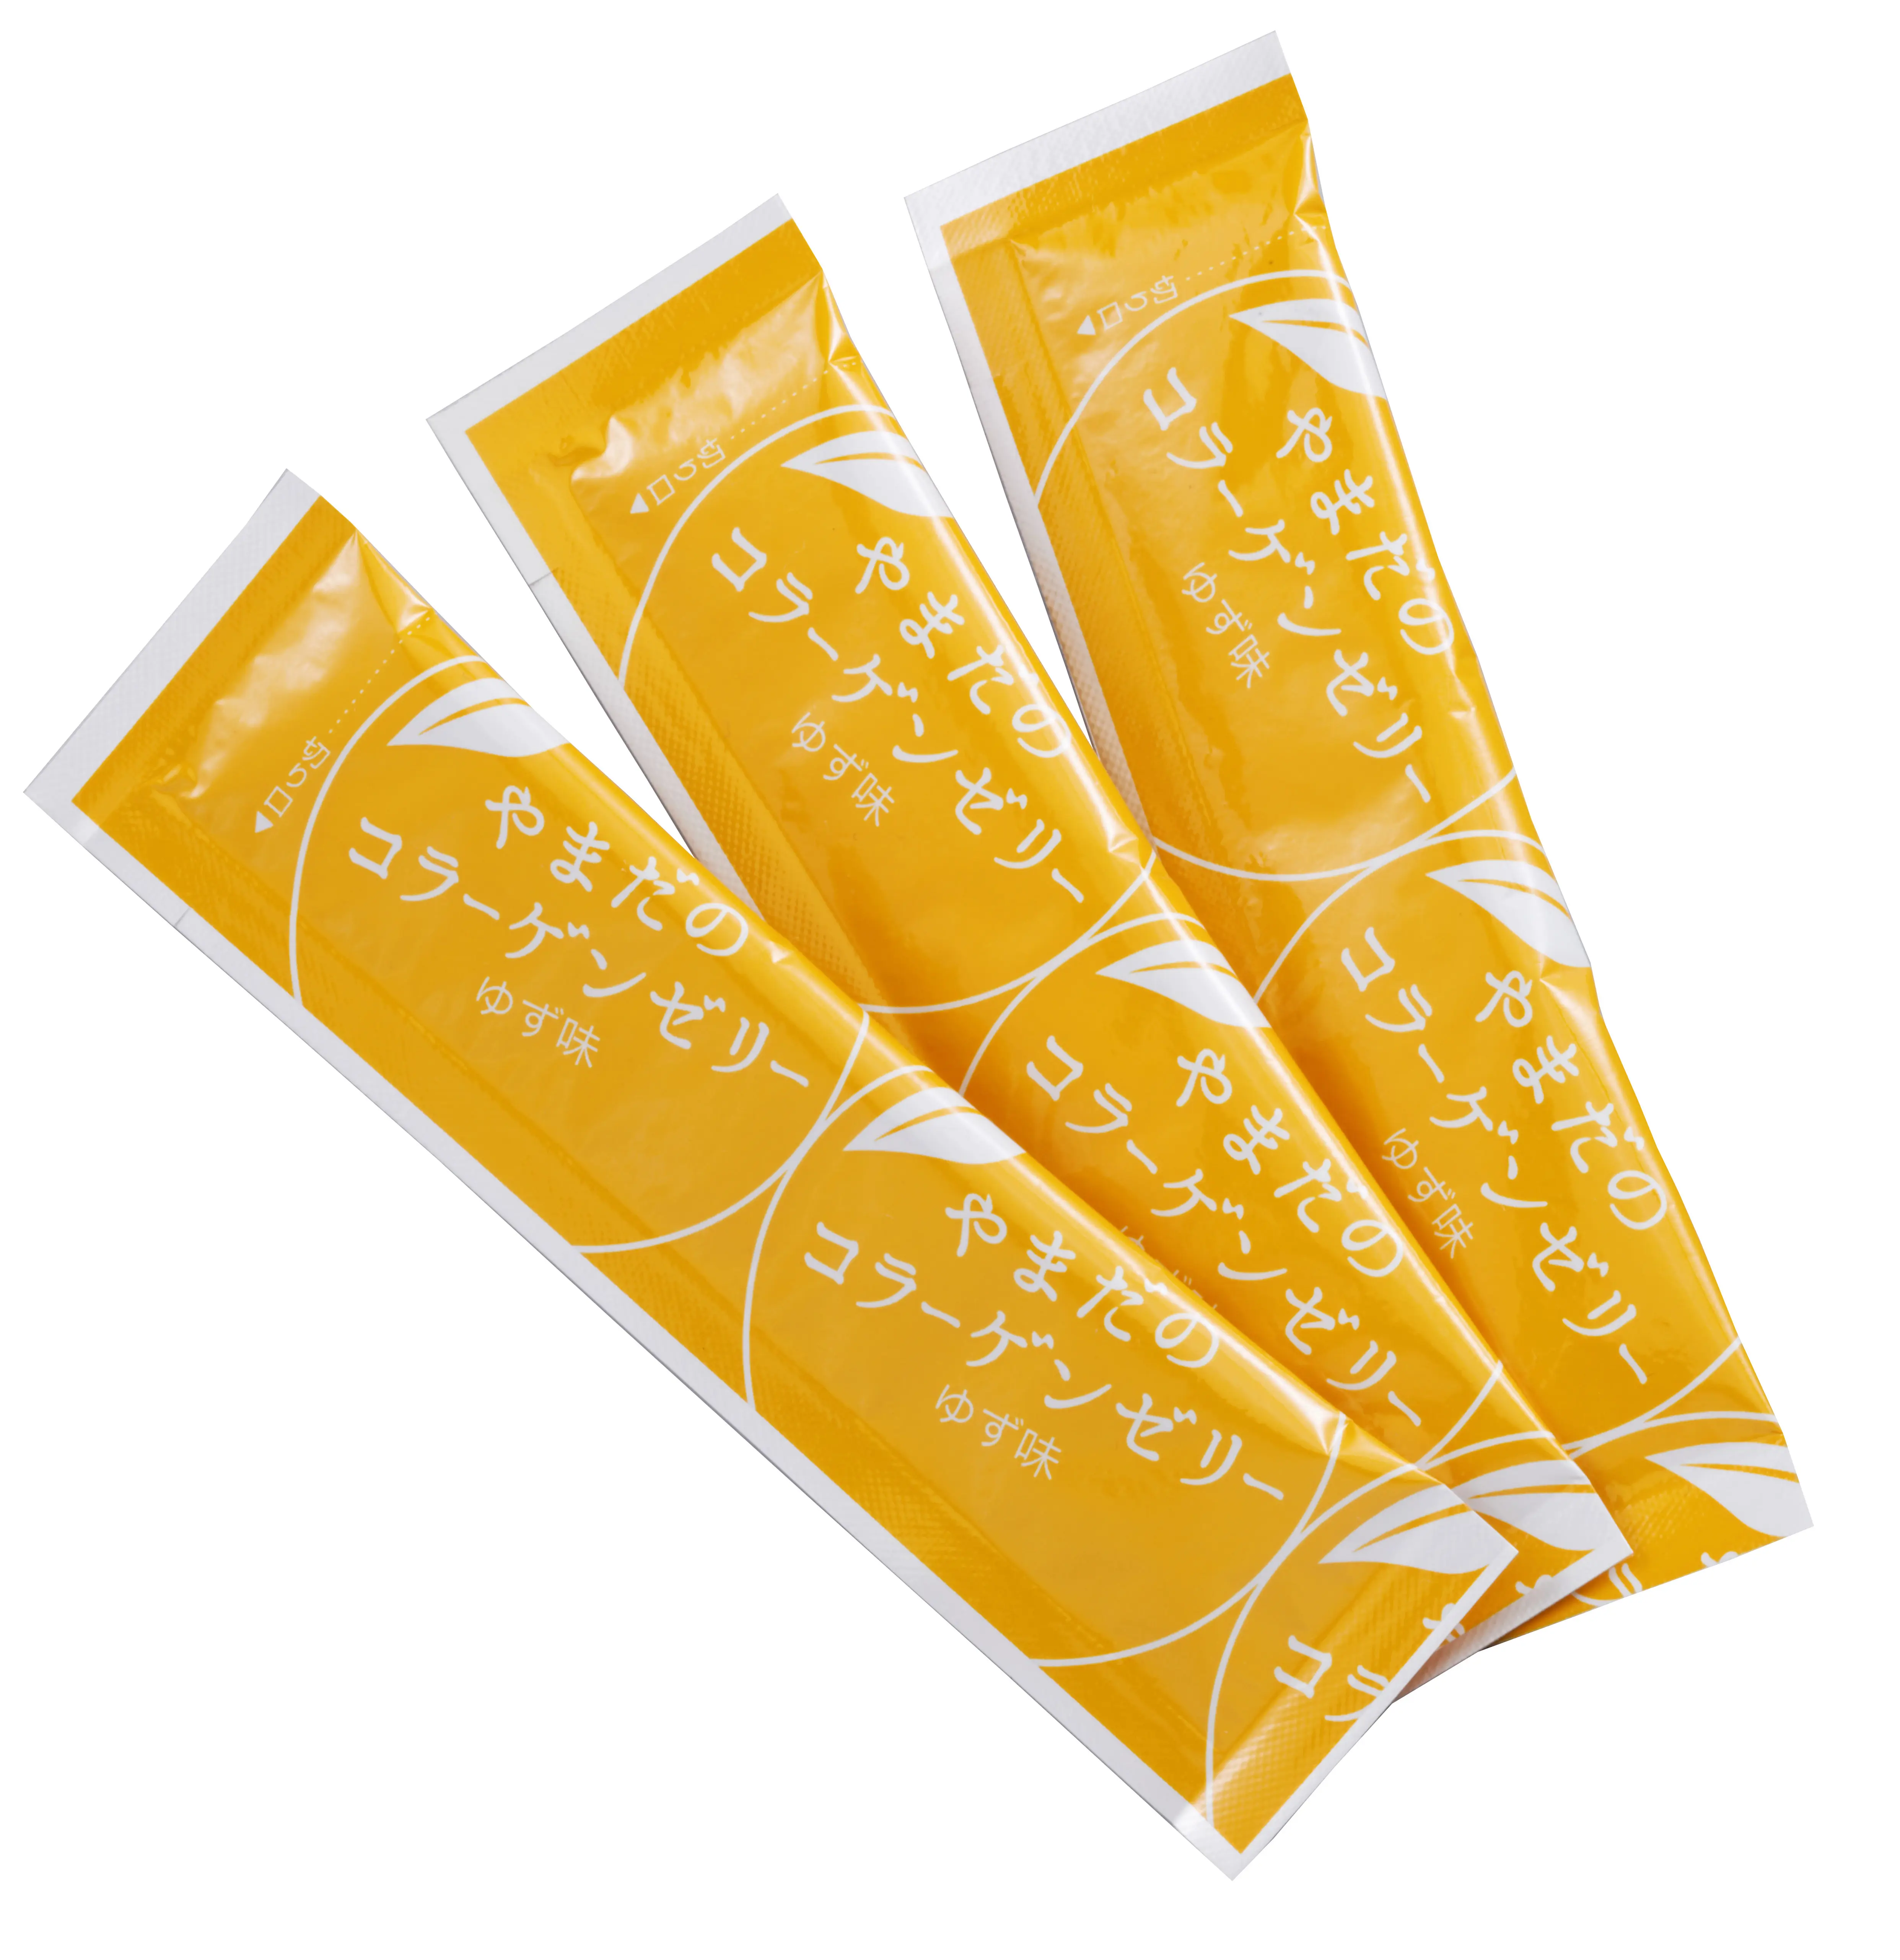 Japan hot sale beauty supplements anti-aging jelly collagen bulk